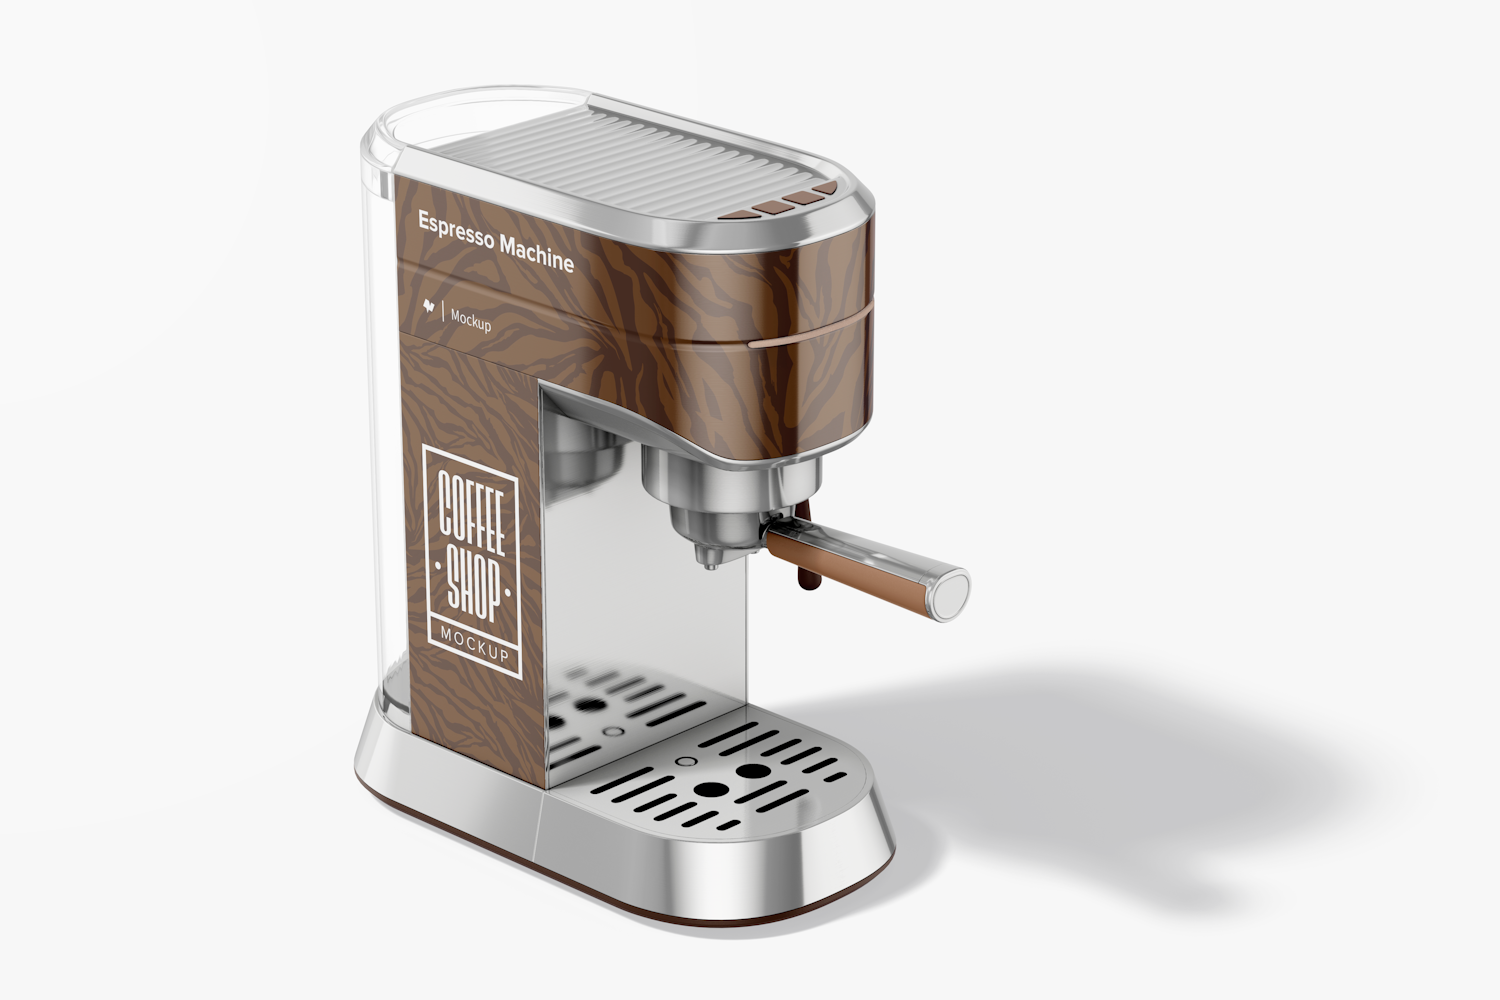 Espresso Machine Mockup, Perspective